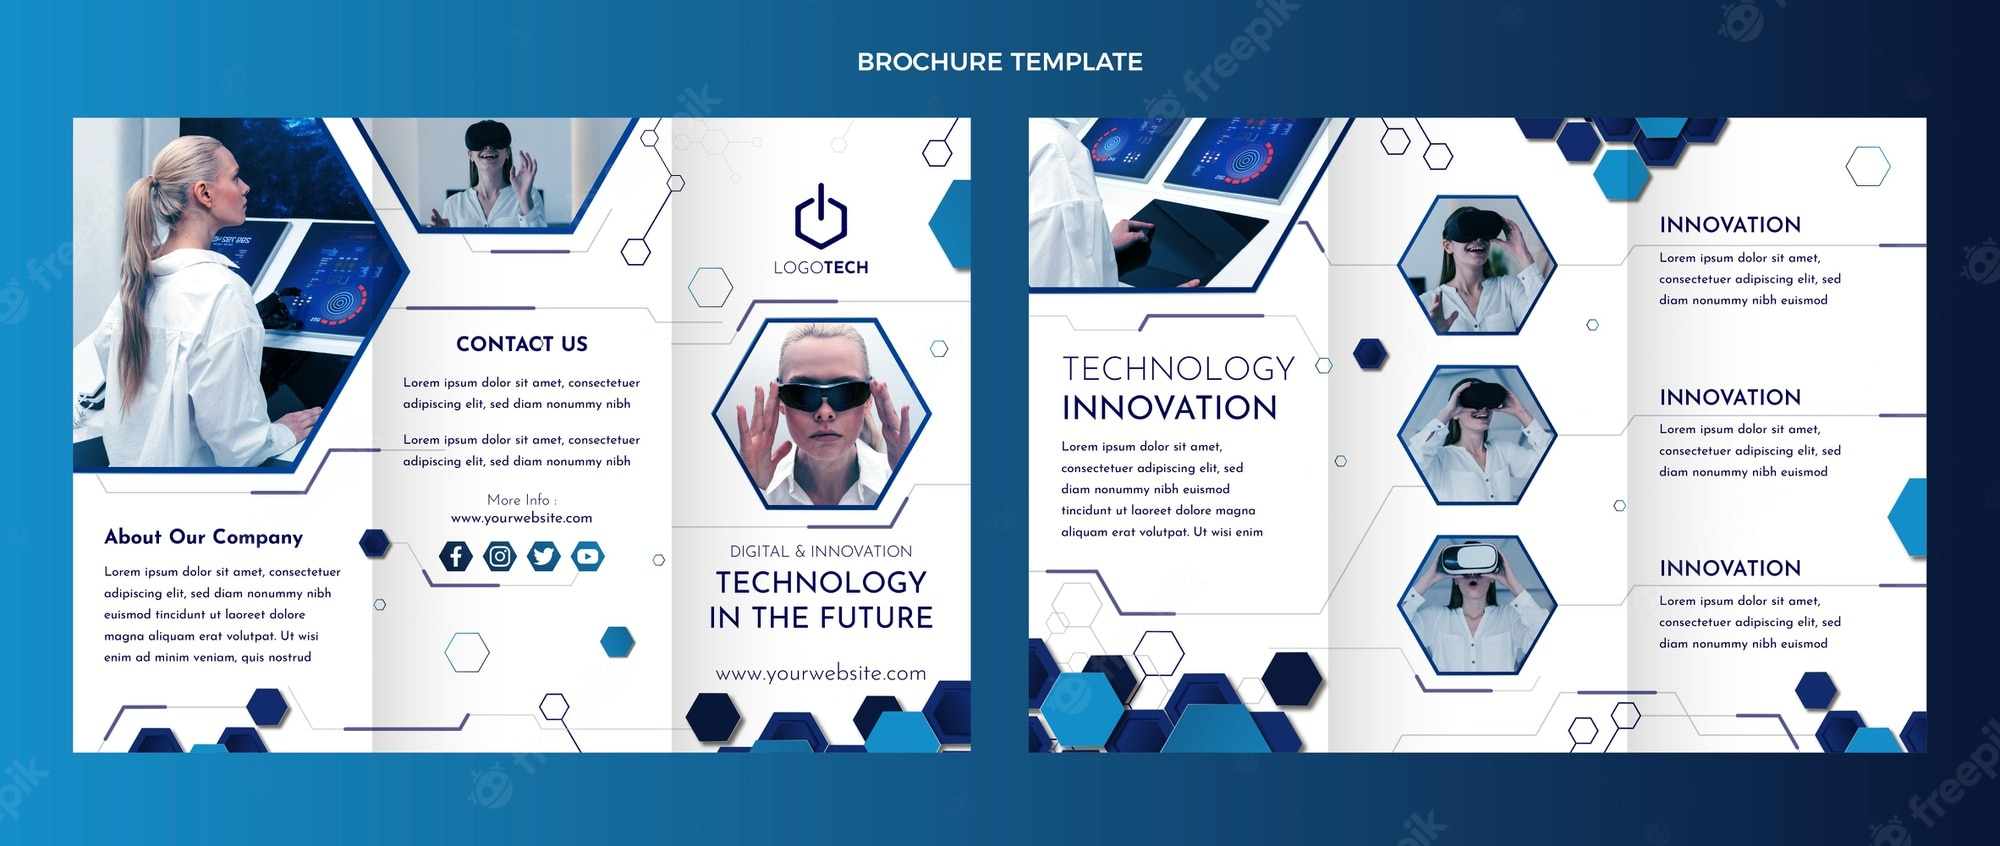 Bilder – Technology Brochure Template  Gratis Vektoren, Fotos und  In Technical Brochure Template